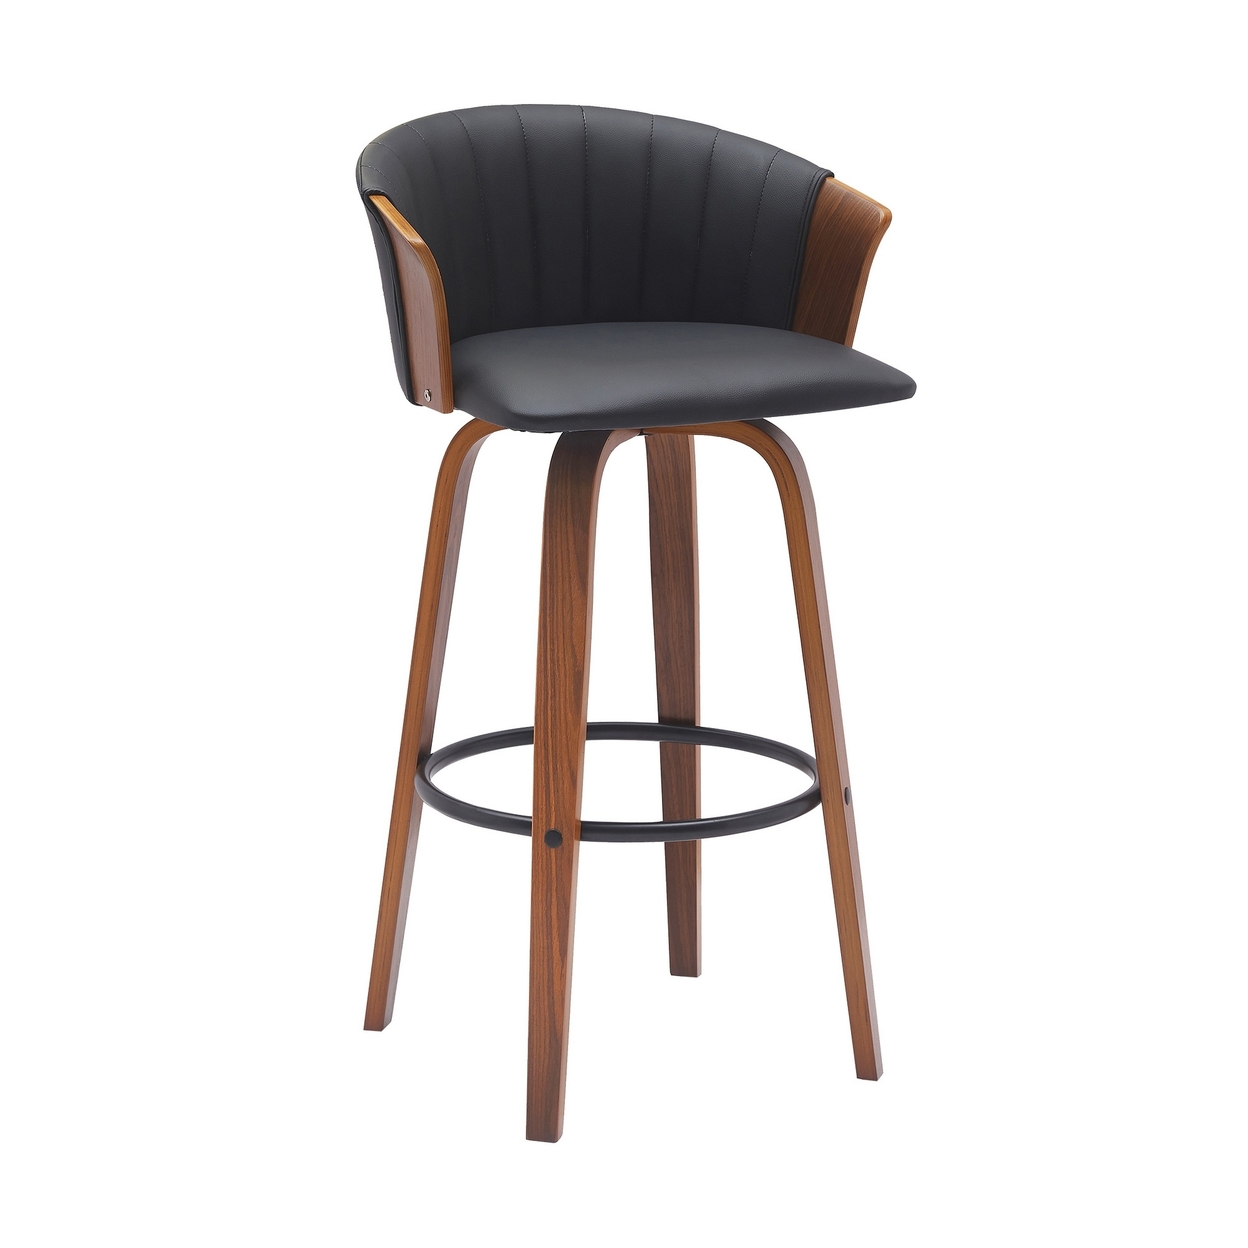 Oja 30 Inch Swivel Barstool Chair, Black Faux Leather, Curved, Walnut Brown - Saltoro Sherpi